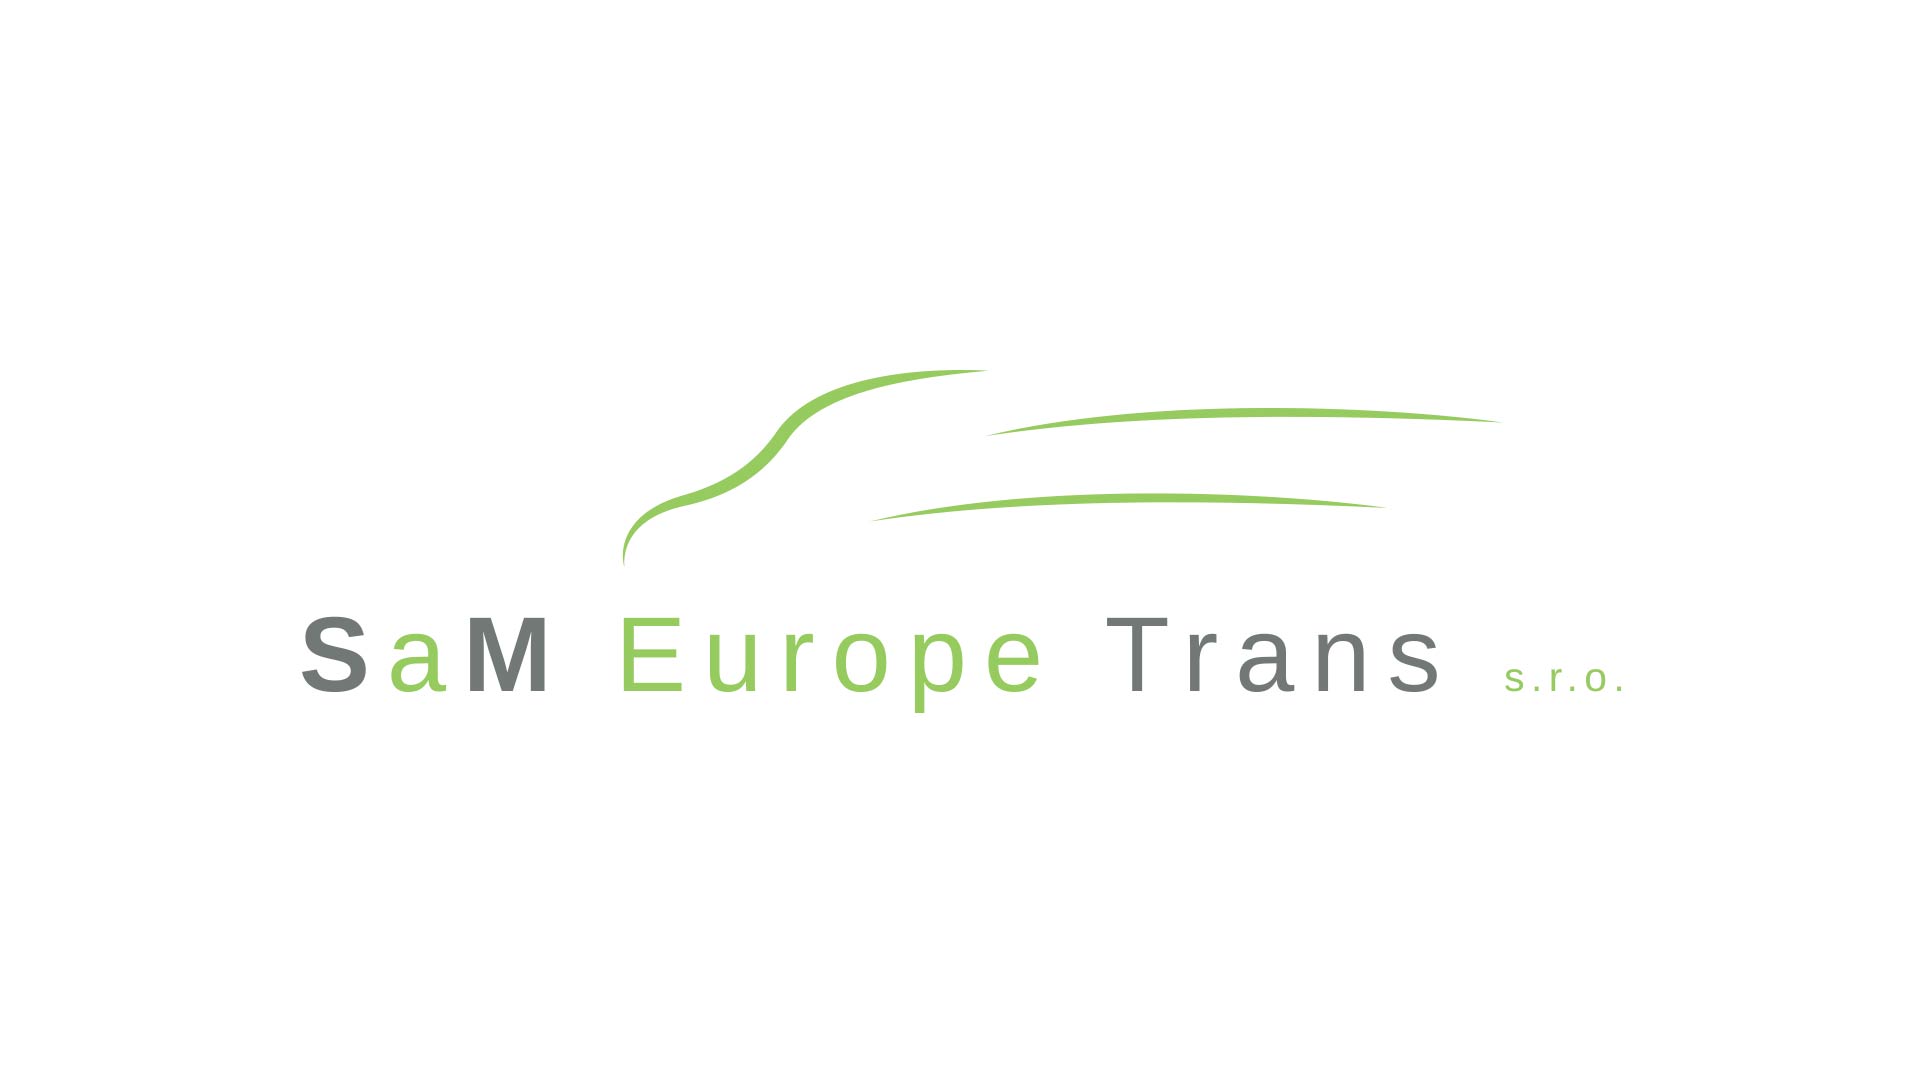 Tvorba loga - logo SaM Europe Trans